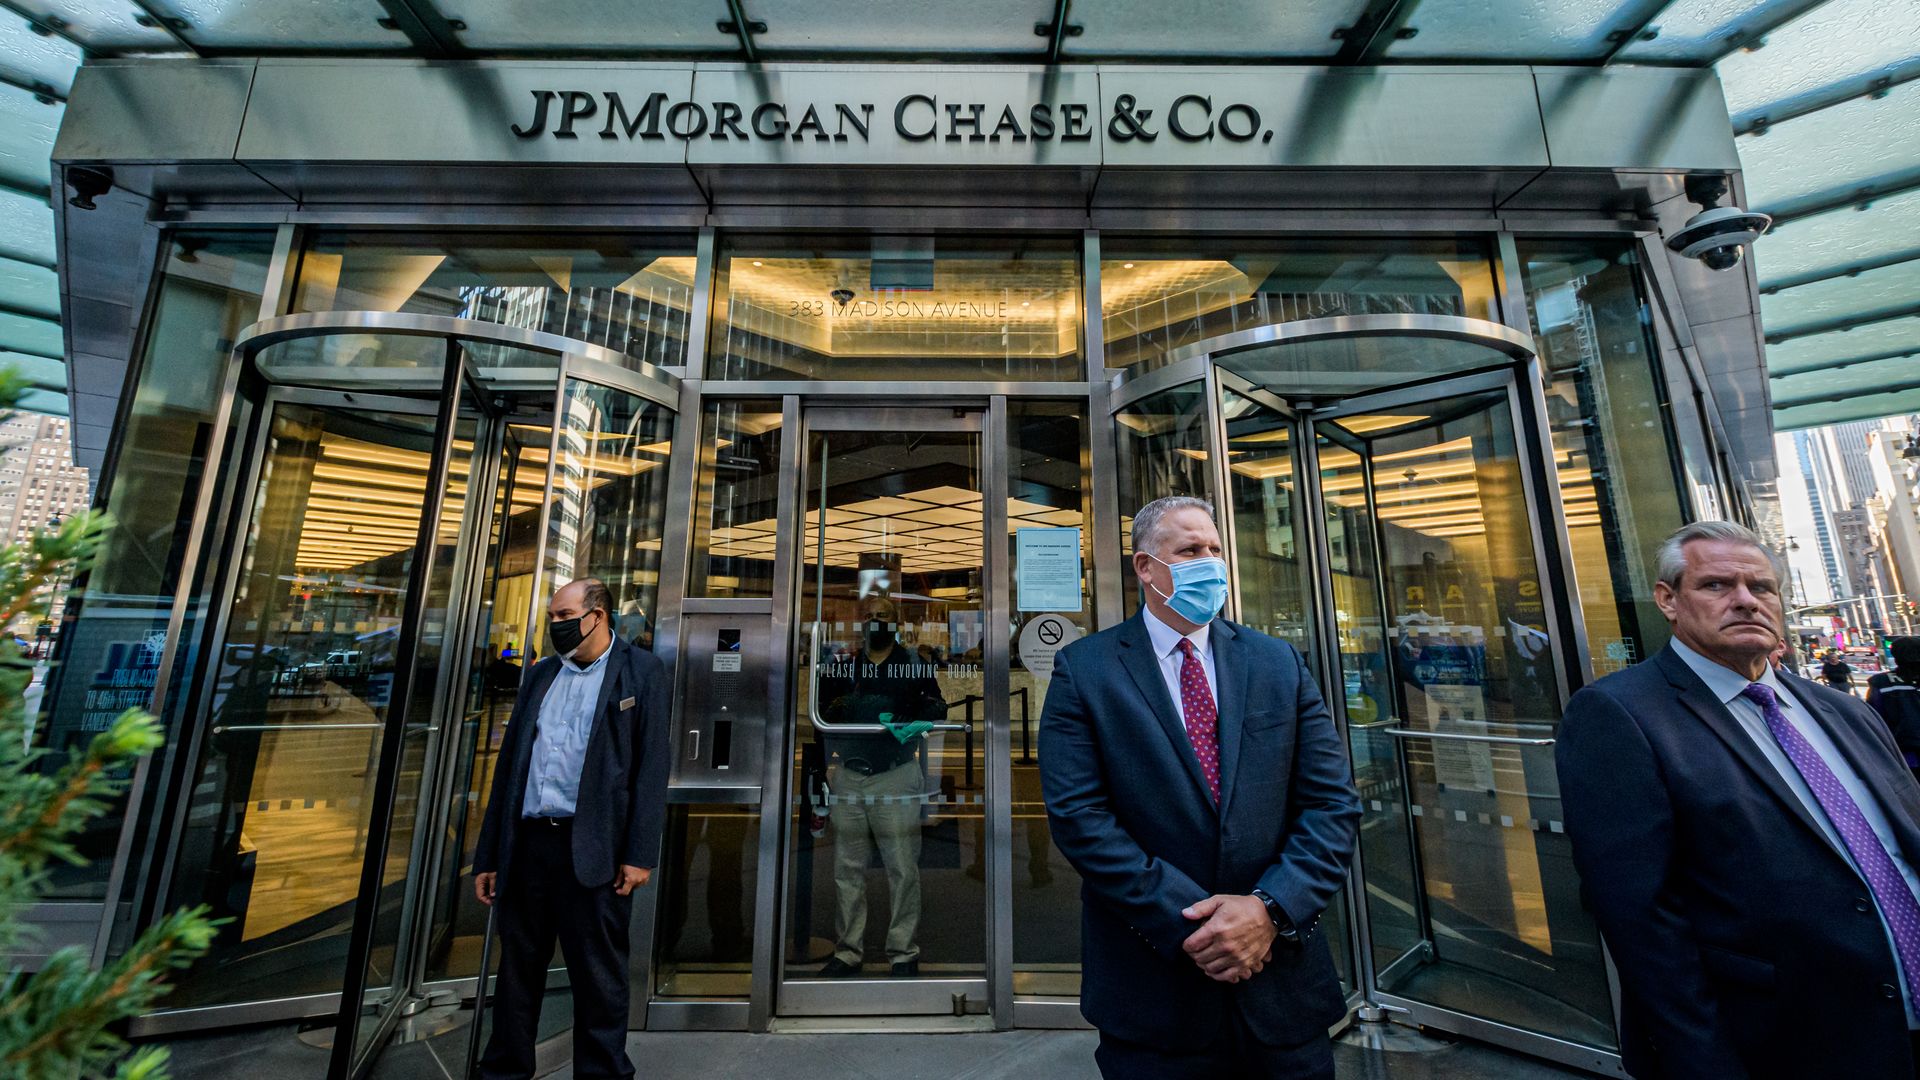 Main entrance at JPMorgan Chase headquarters in New York City.